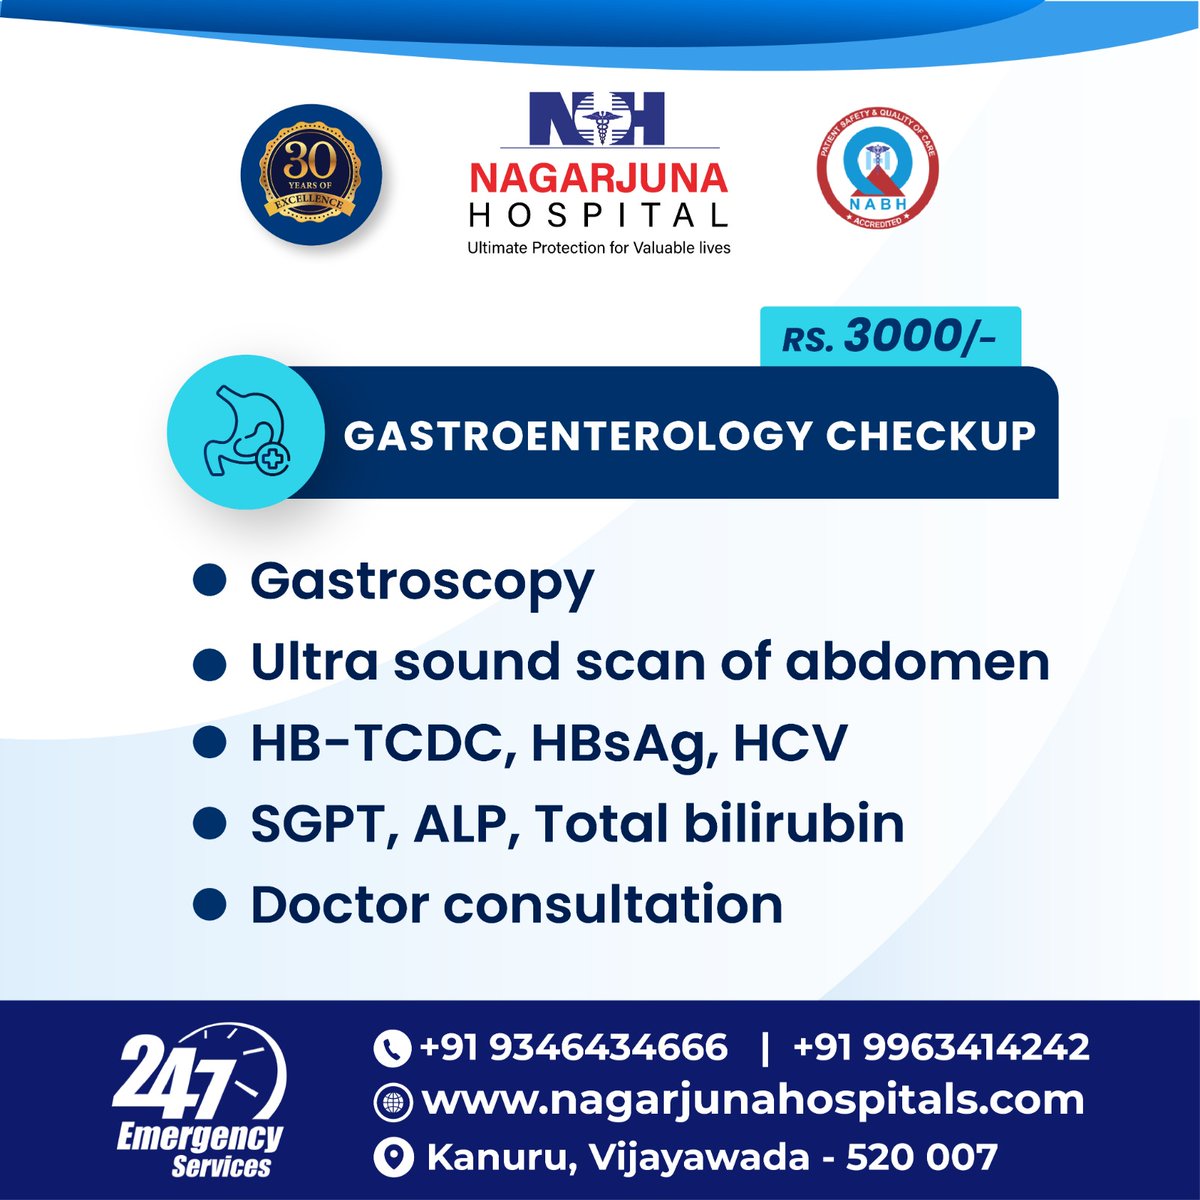 #doctors #medical #hospitals #nagarjunahospitals #gastroenterology #ultrasound #doctorconsultation #CheckUp #HBsAg #HCV #Care #cure #gastro #24x7Emergency #life #emergency #Treatment #healthpackage #vijayawada #contactus